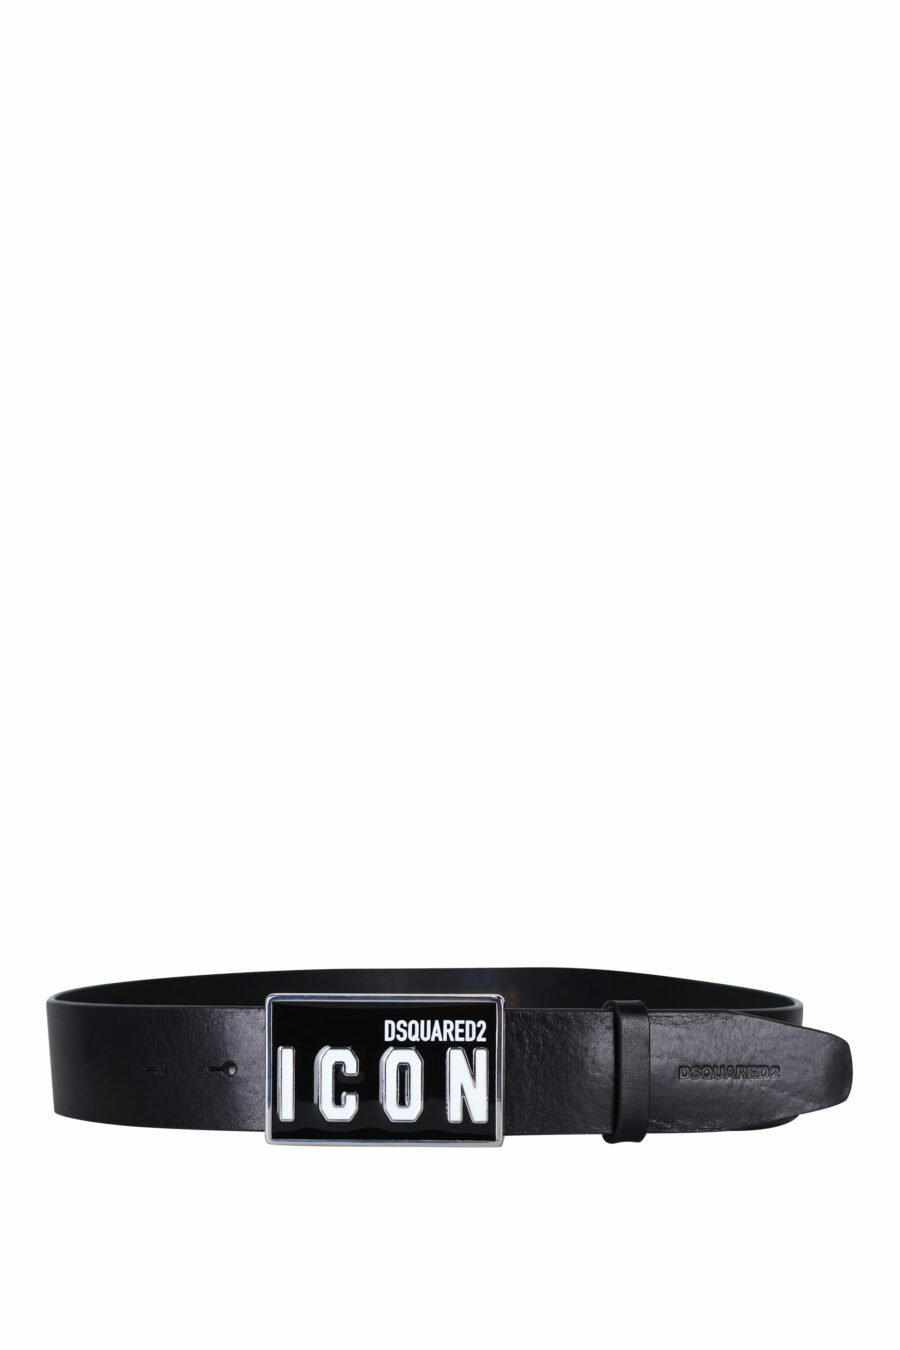 Black belt with mini-logo "icon" - 8058097925067